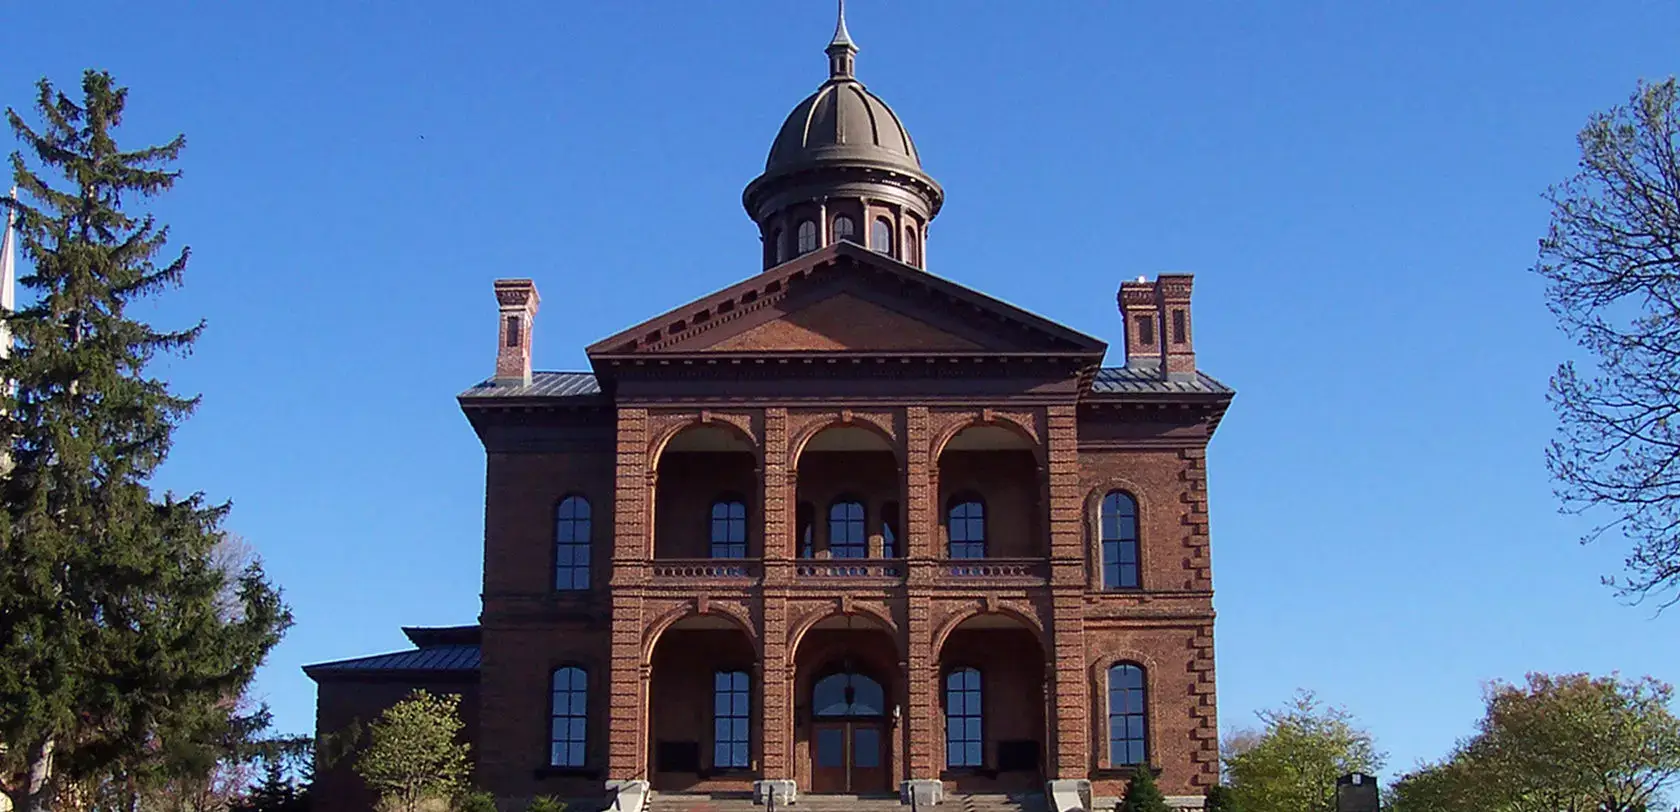 Washington County Courthouse building